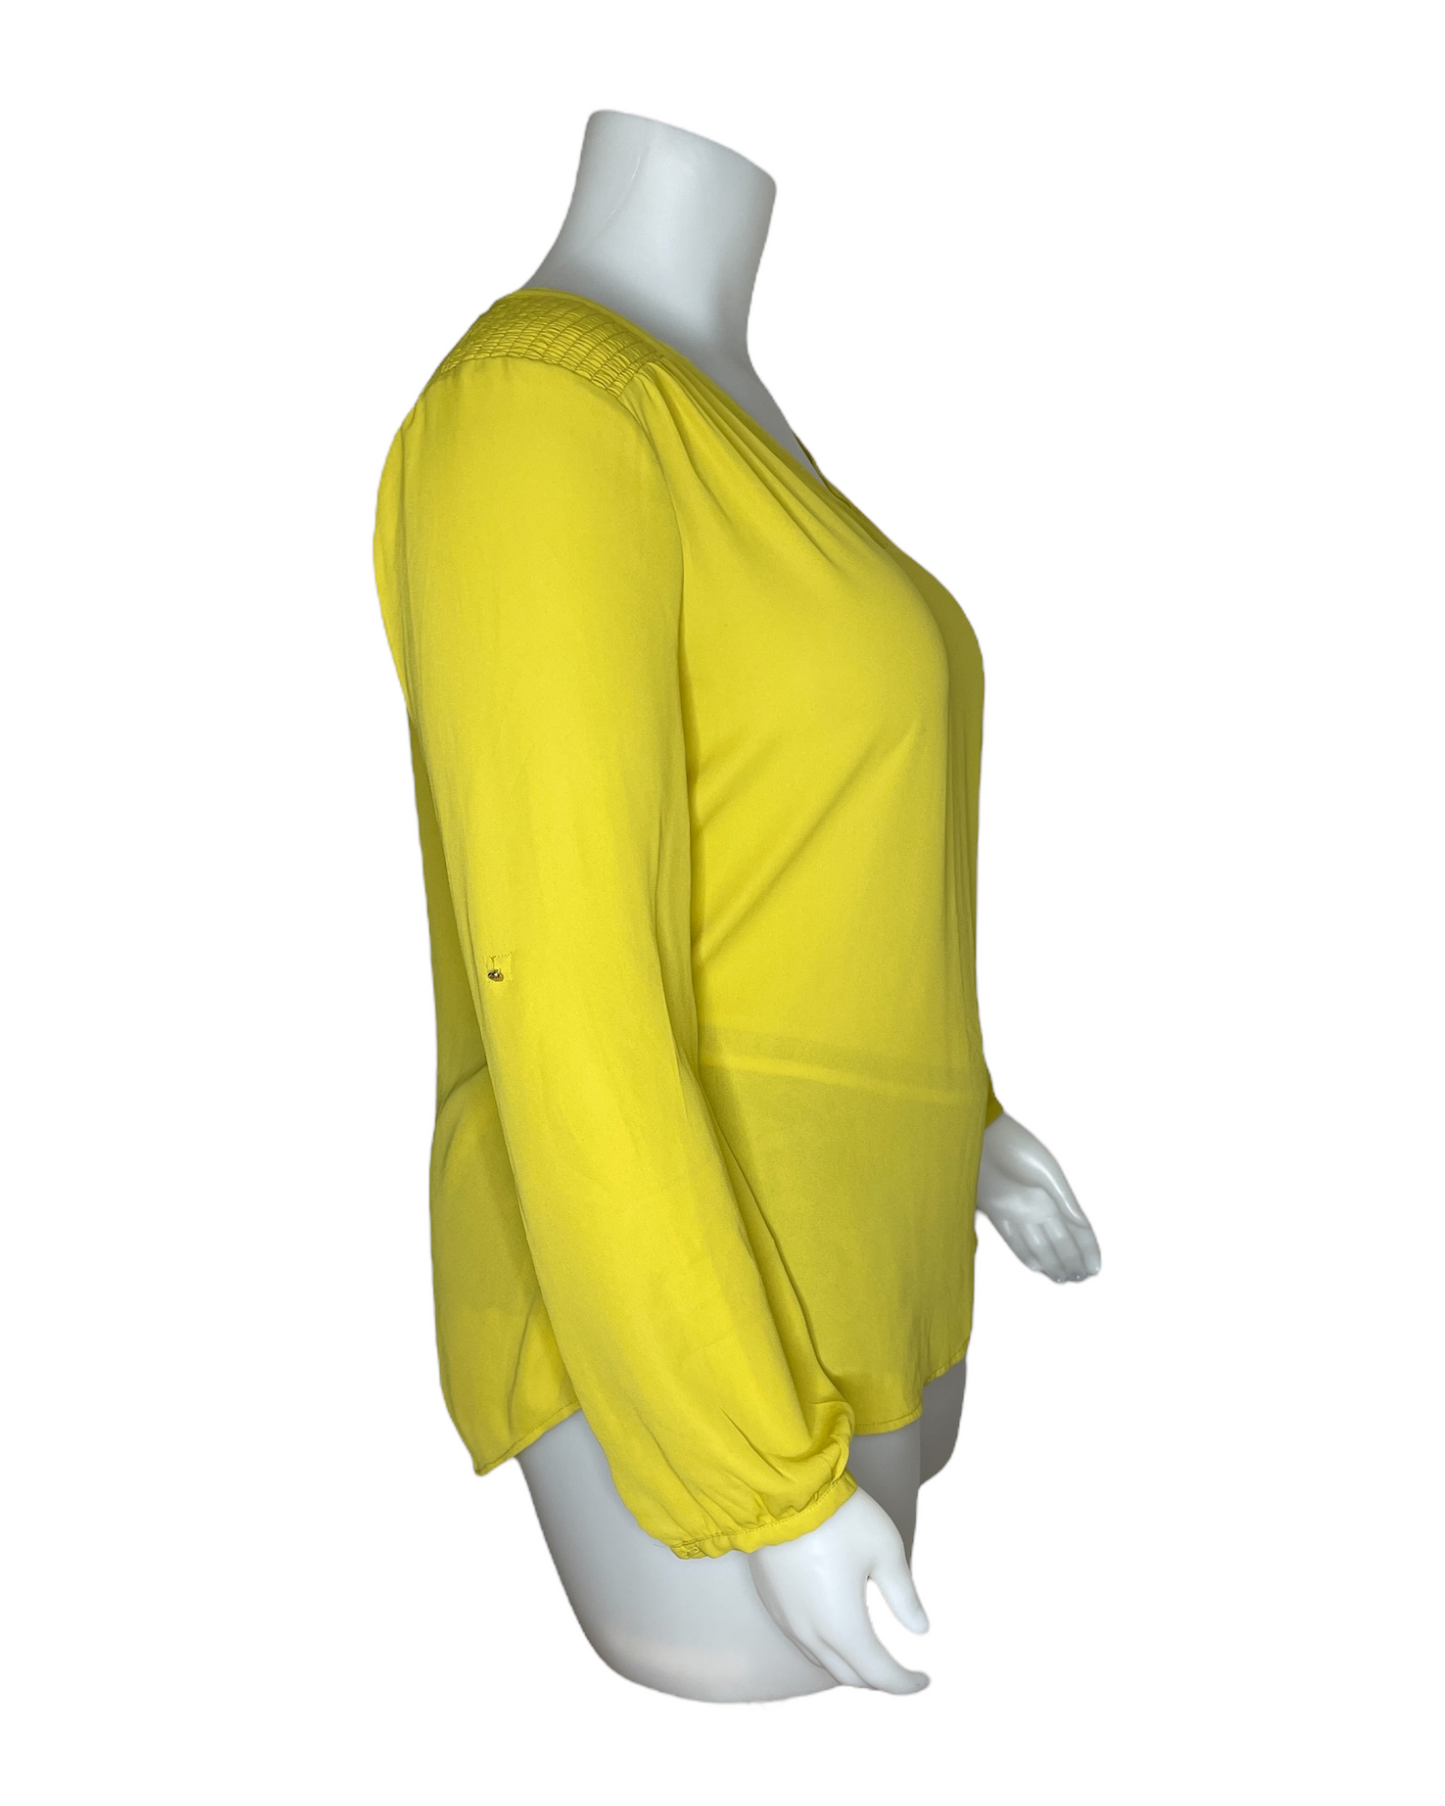 "Le Chateau" Yellow Long-sleeve Shirt (XXL)